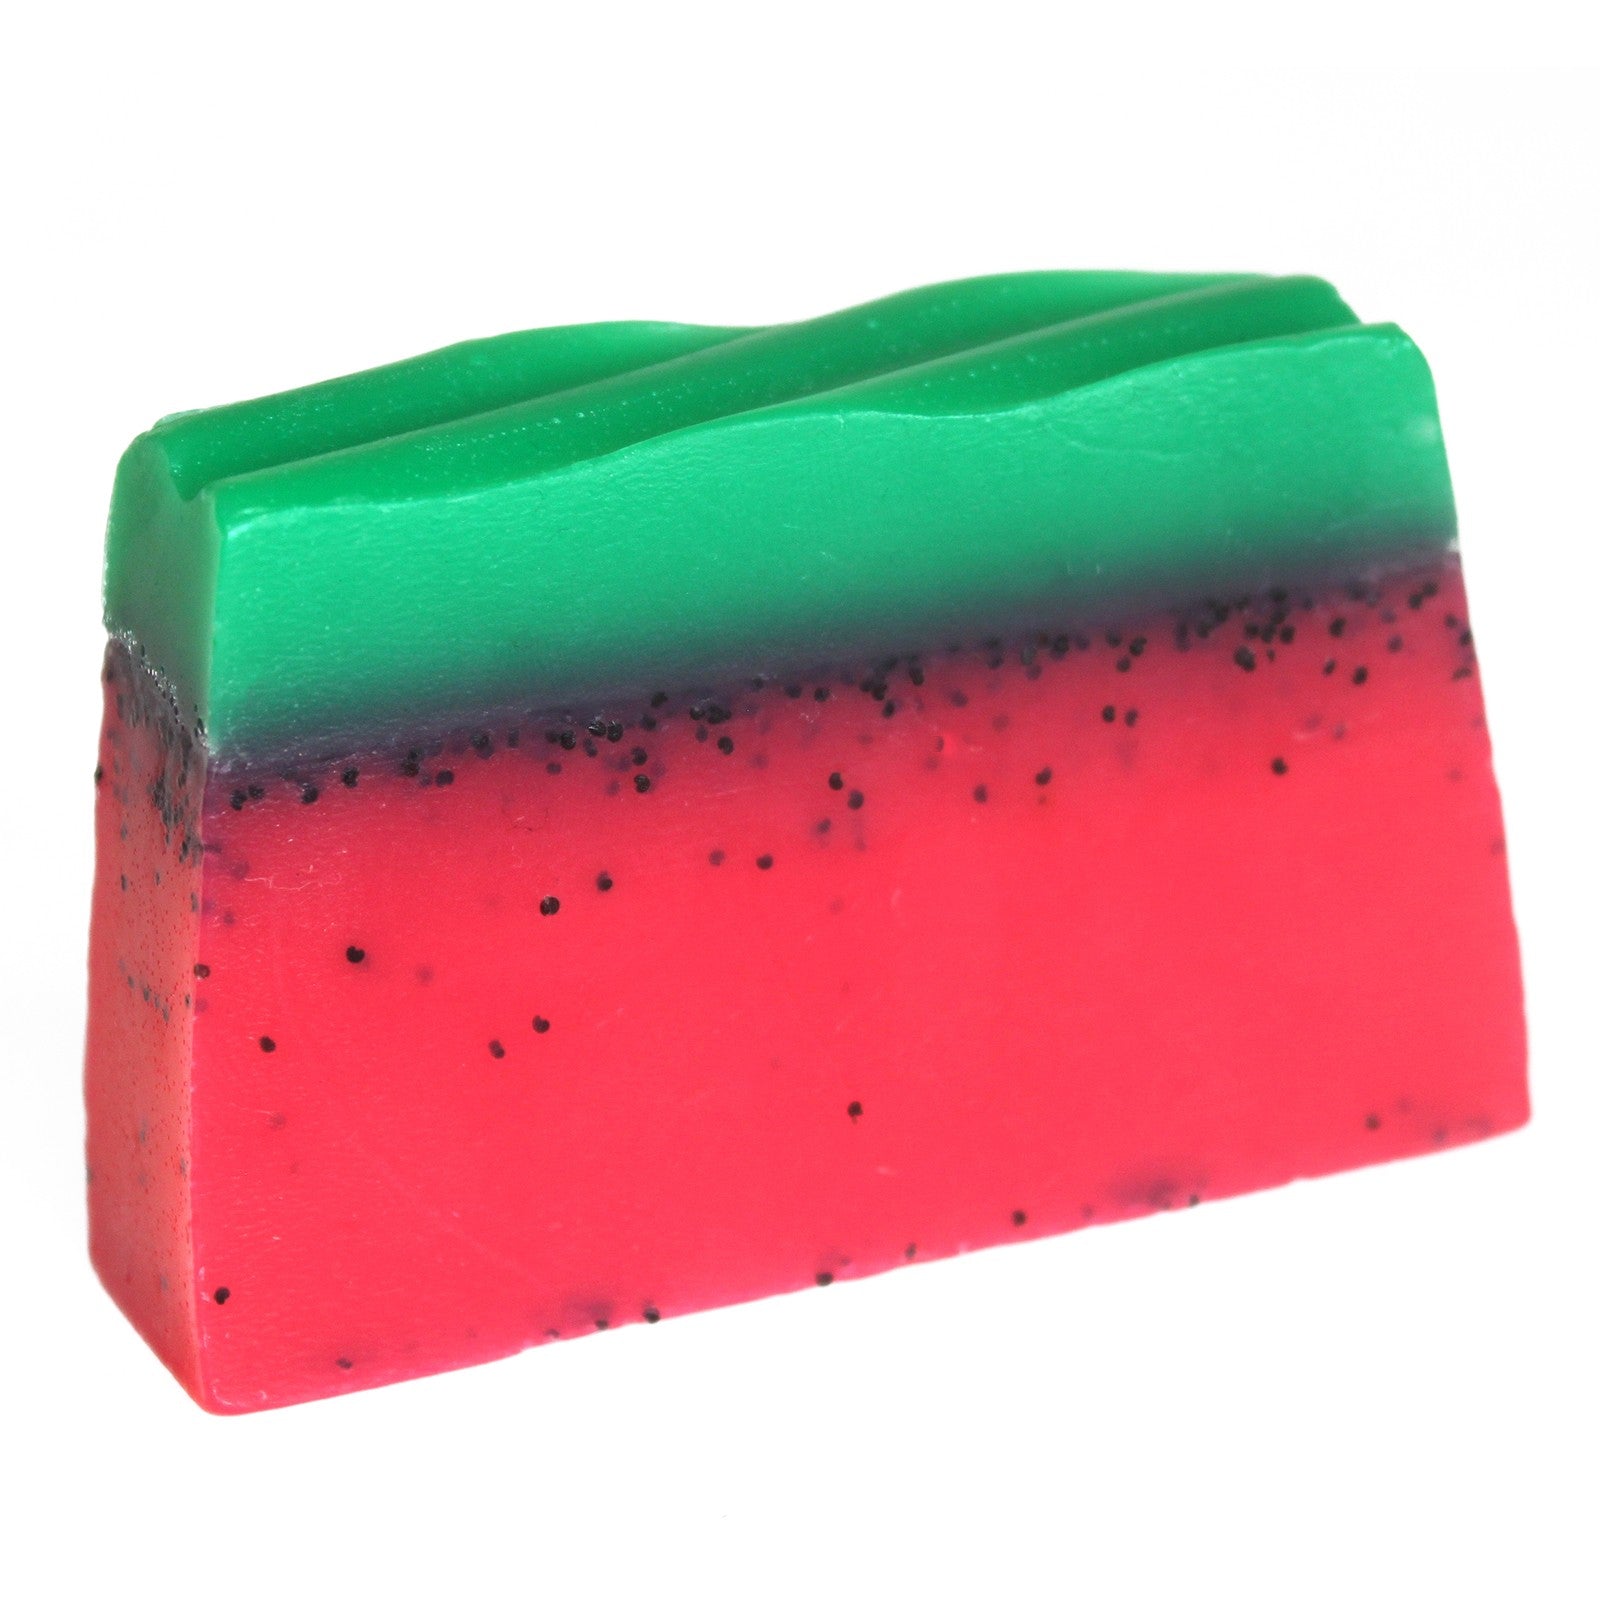 Tropical Paradise Soap Loaf - Watermelon-